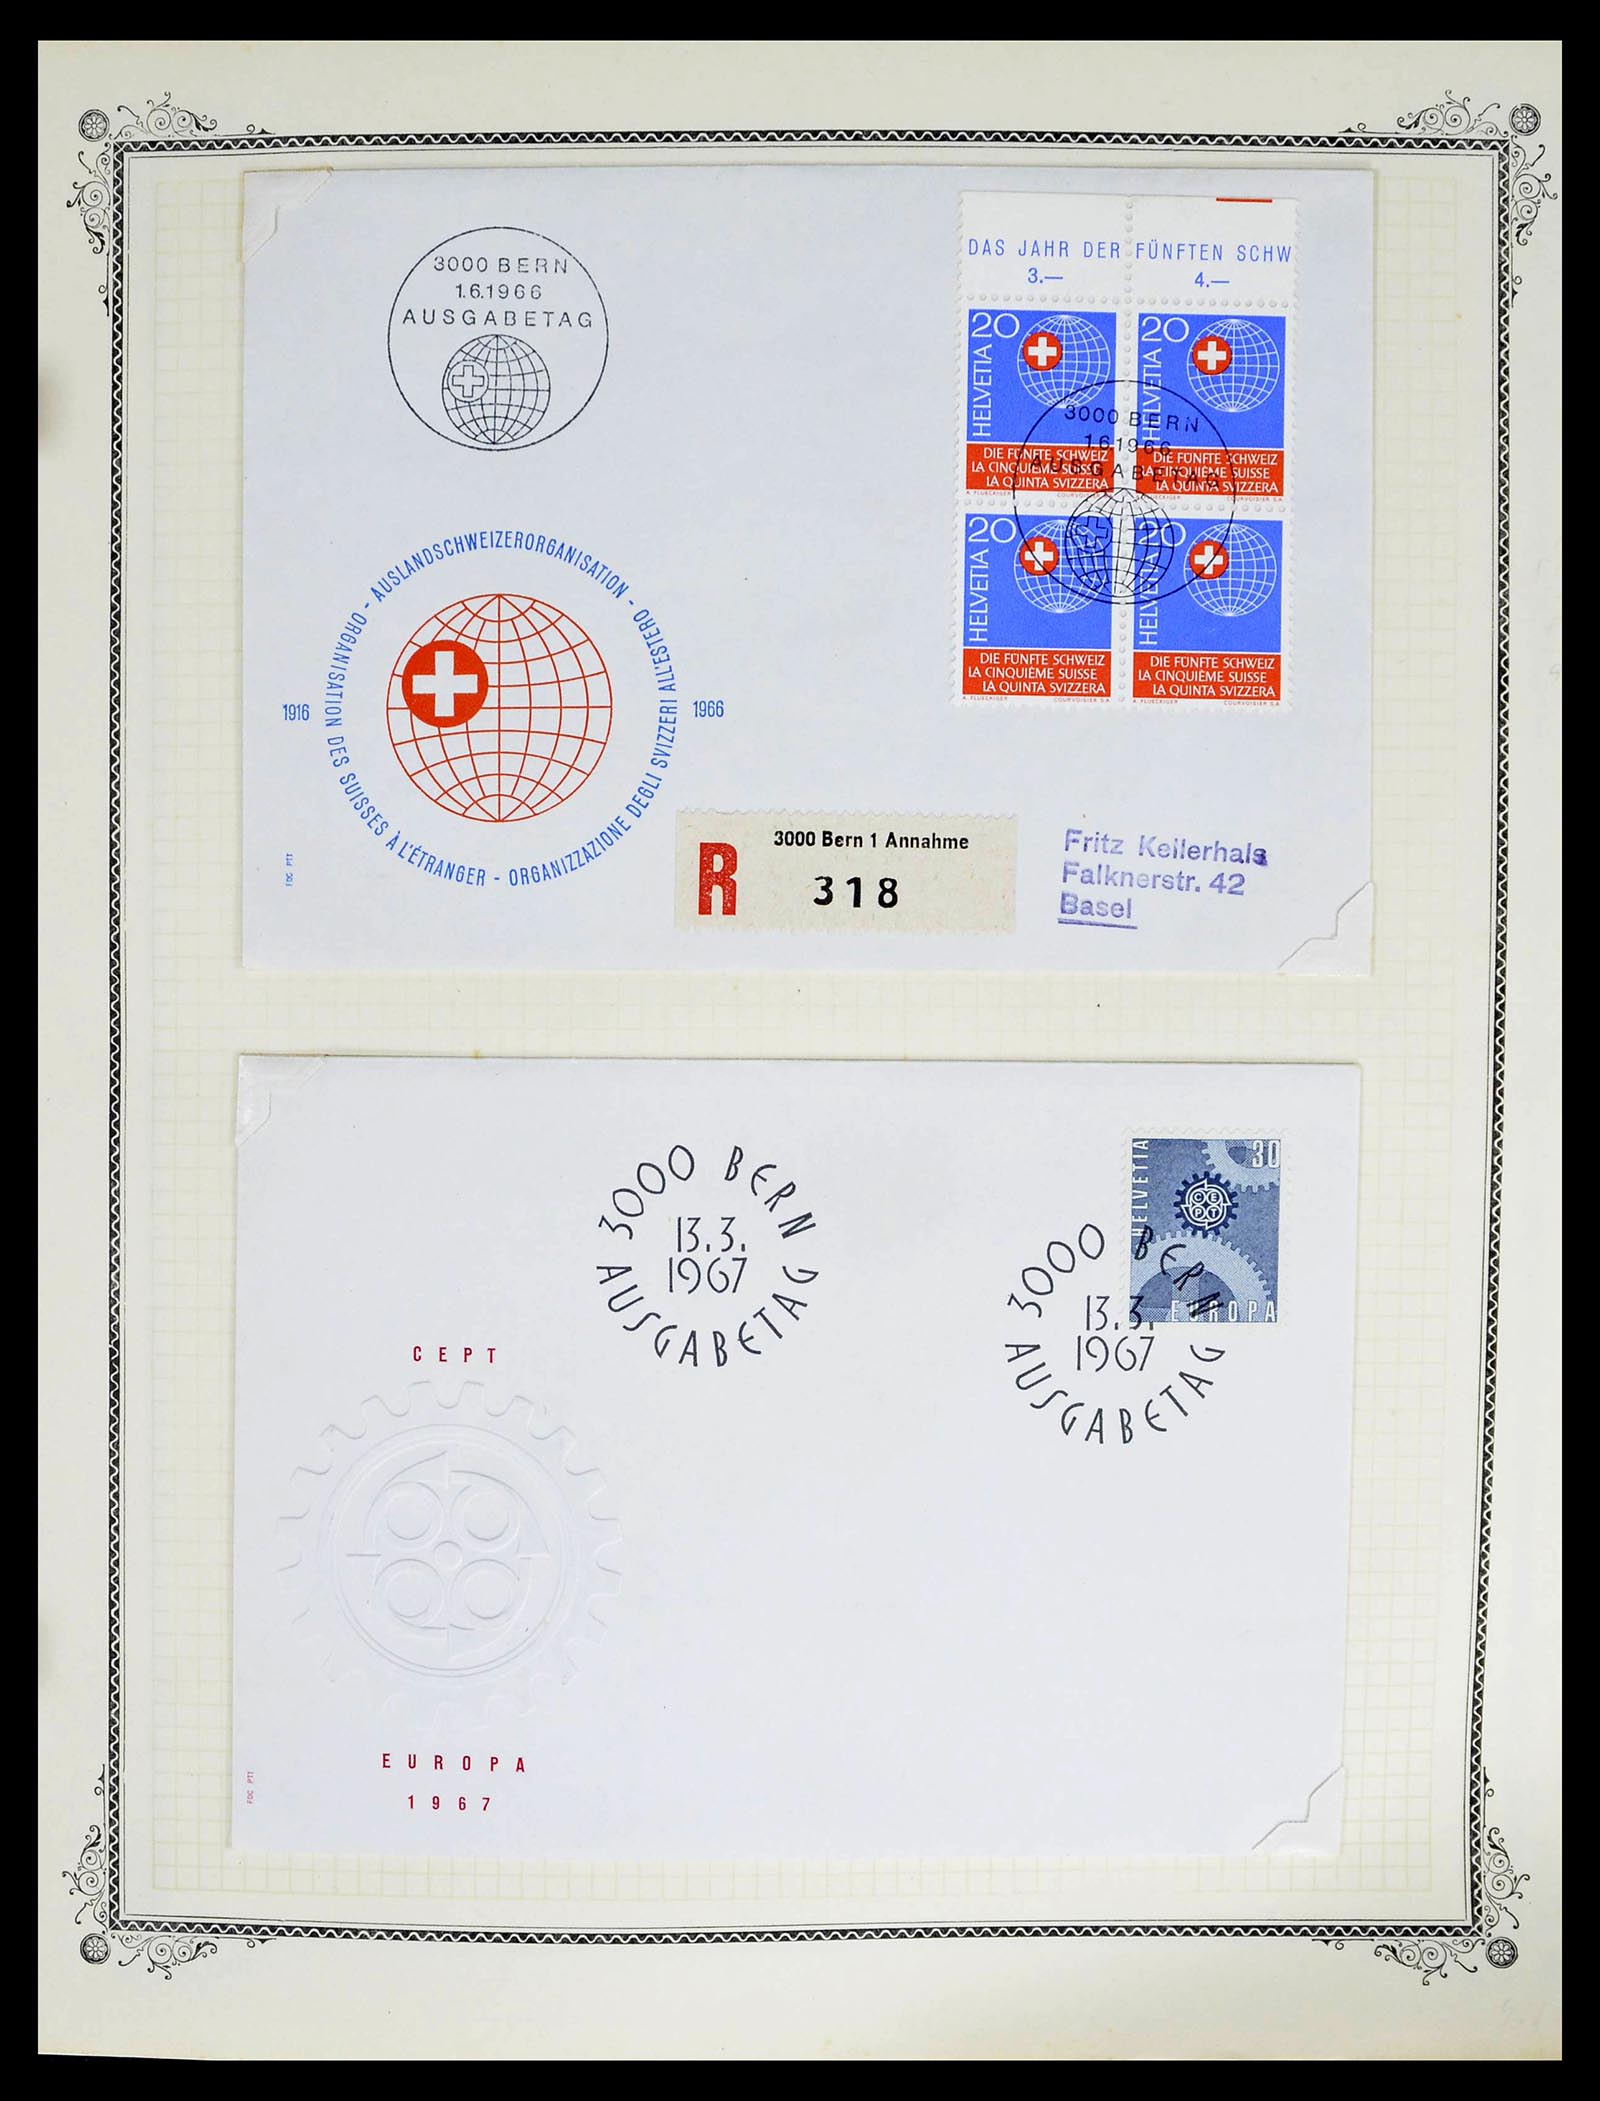 39178 0061 - Stamp collection 39178 Switzerland 1850-1989.